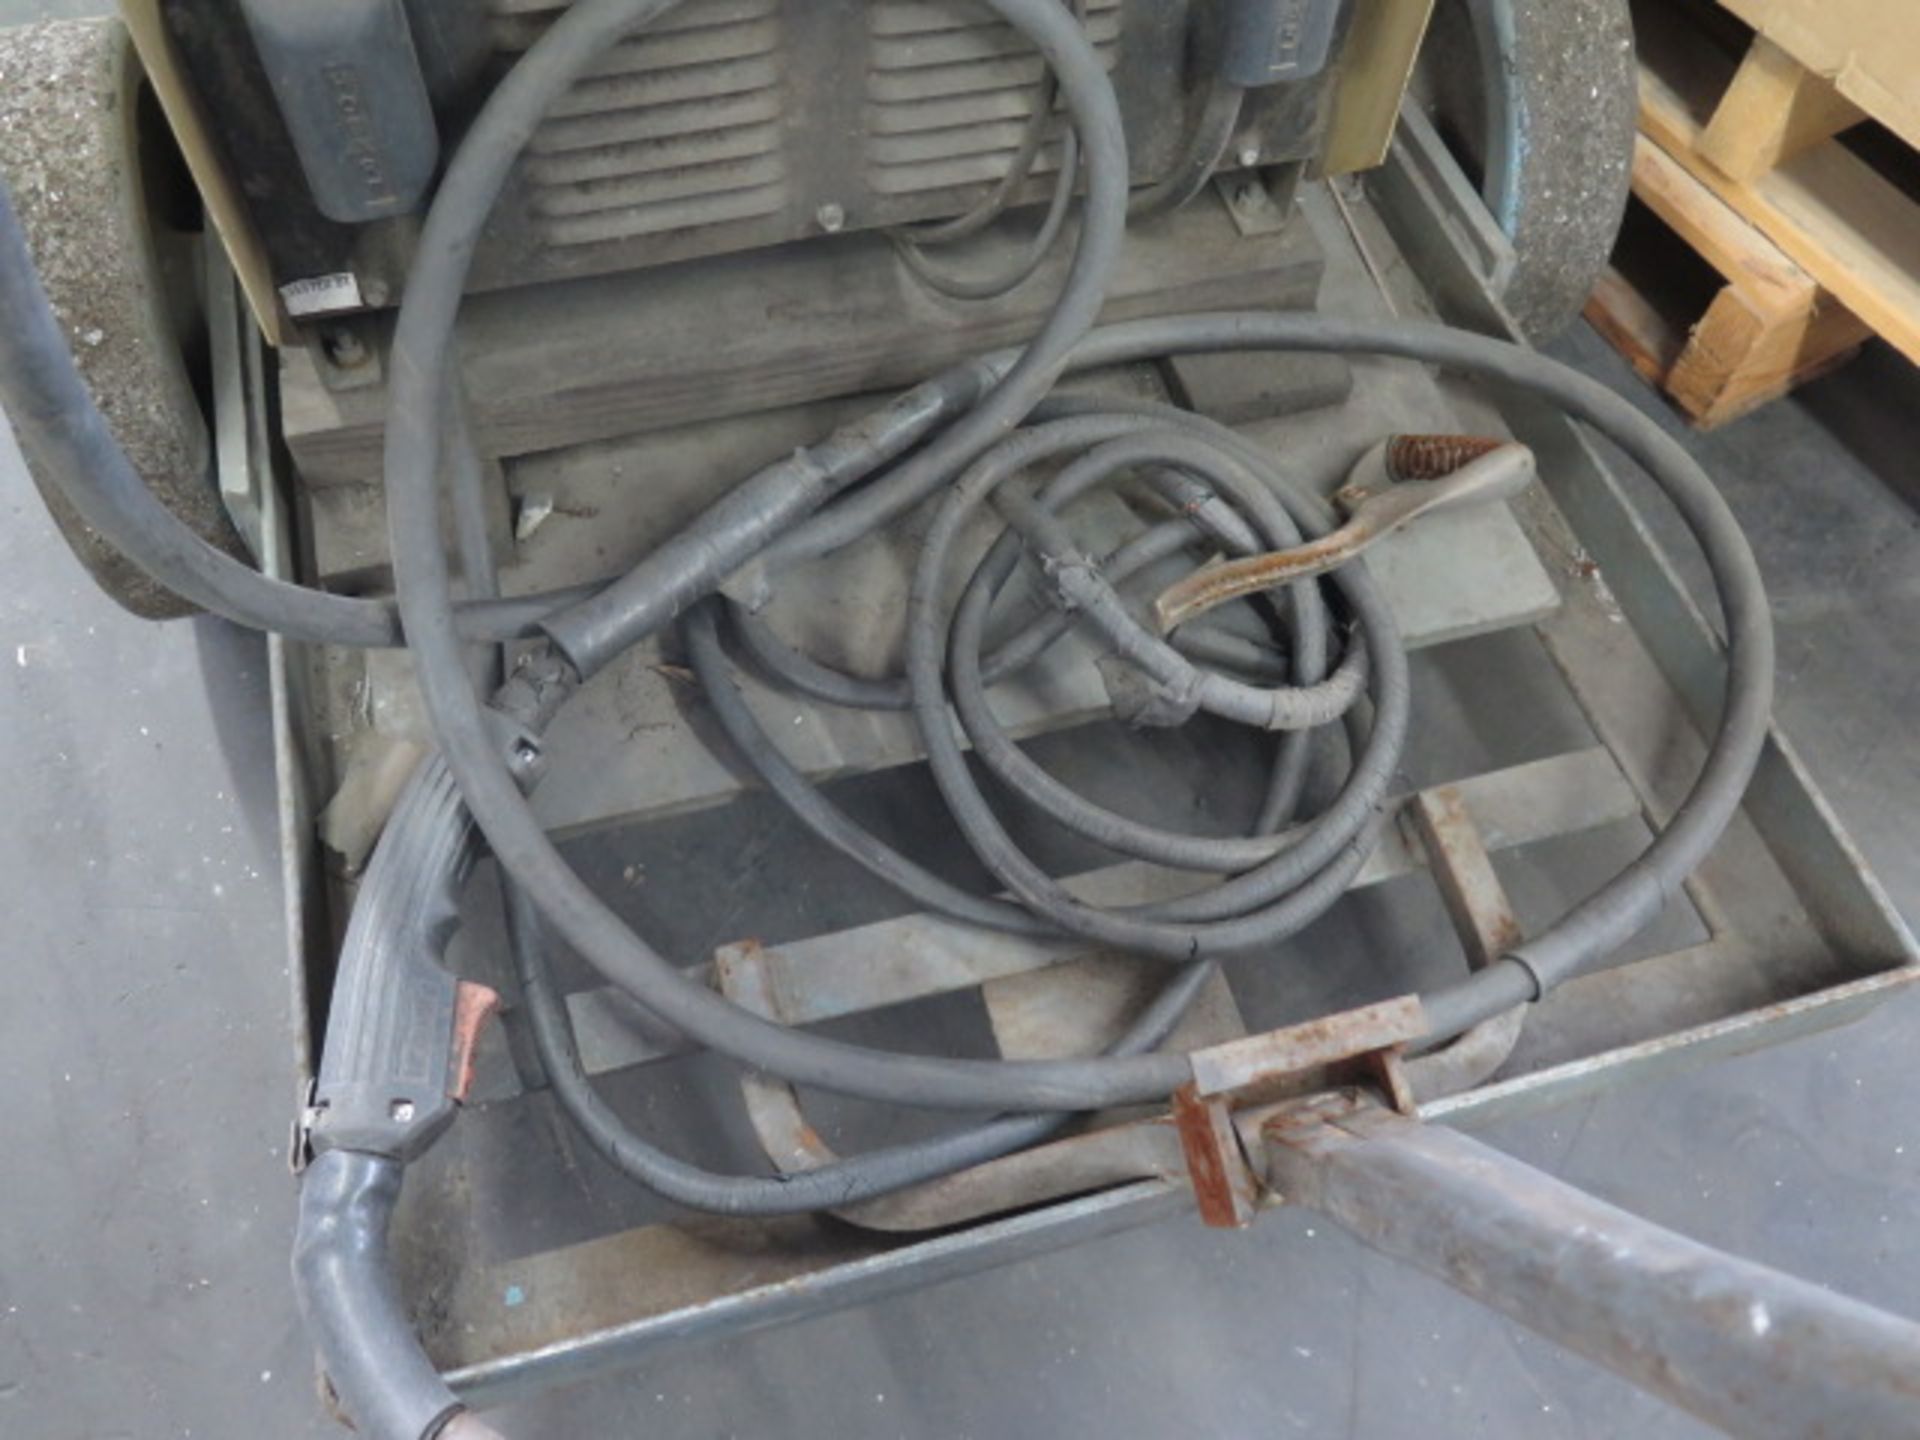 Hobart RC-200 Arc welding Power Source w/ Hobart-17 Wire Feeder - Image 6 of 10